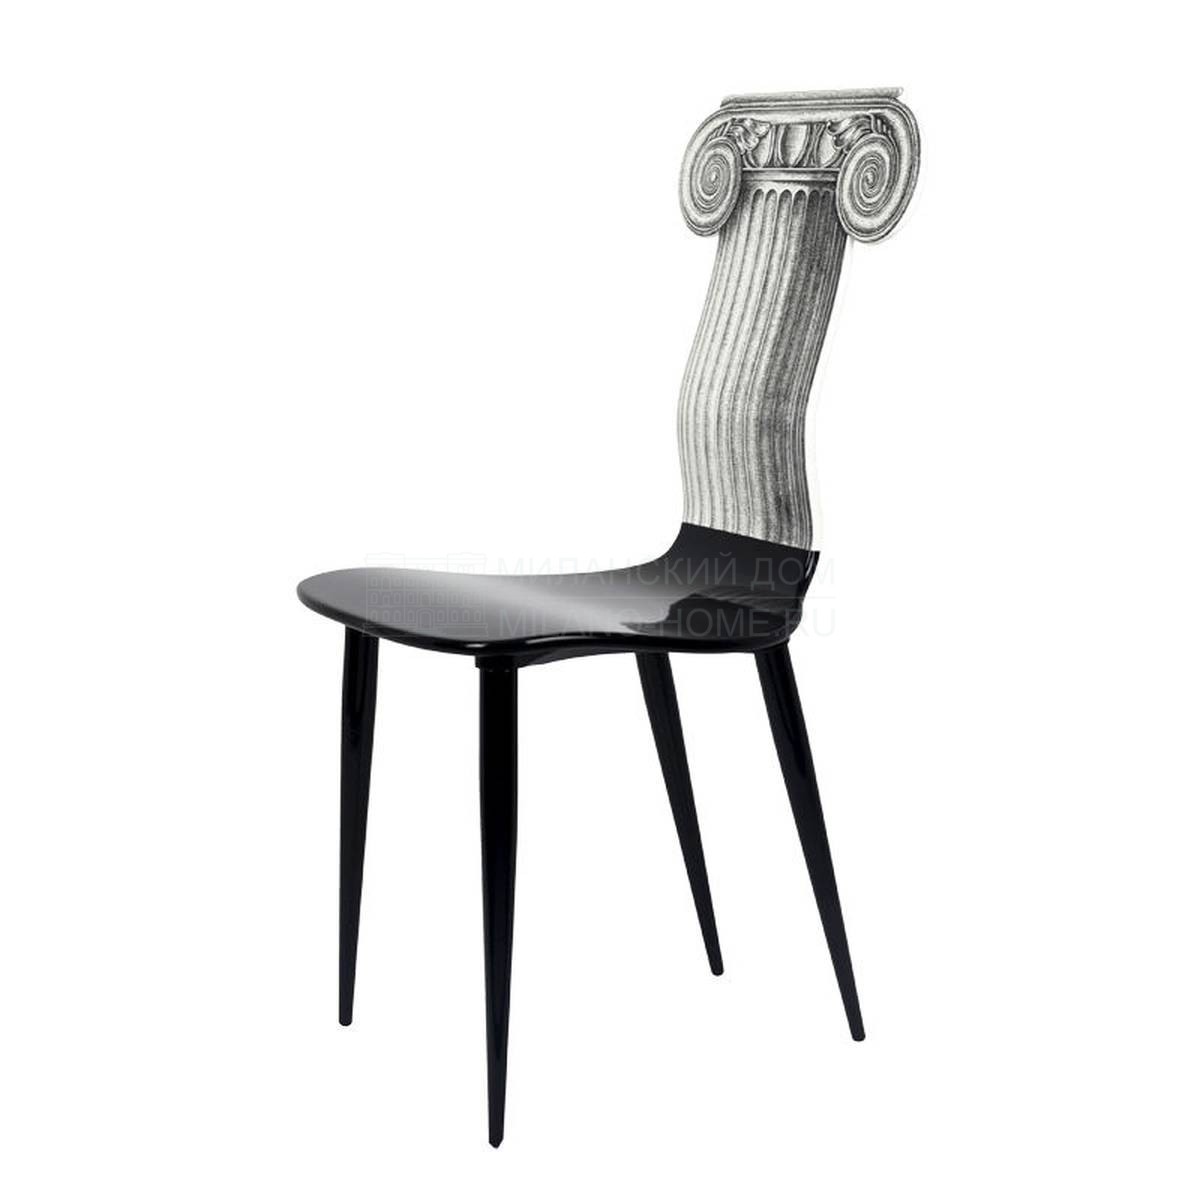 Металлический / Пластиковый стул Capitello jonico из Италии фабрики FORNASETTI